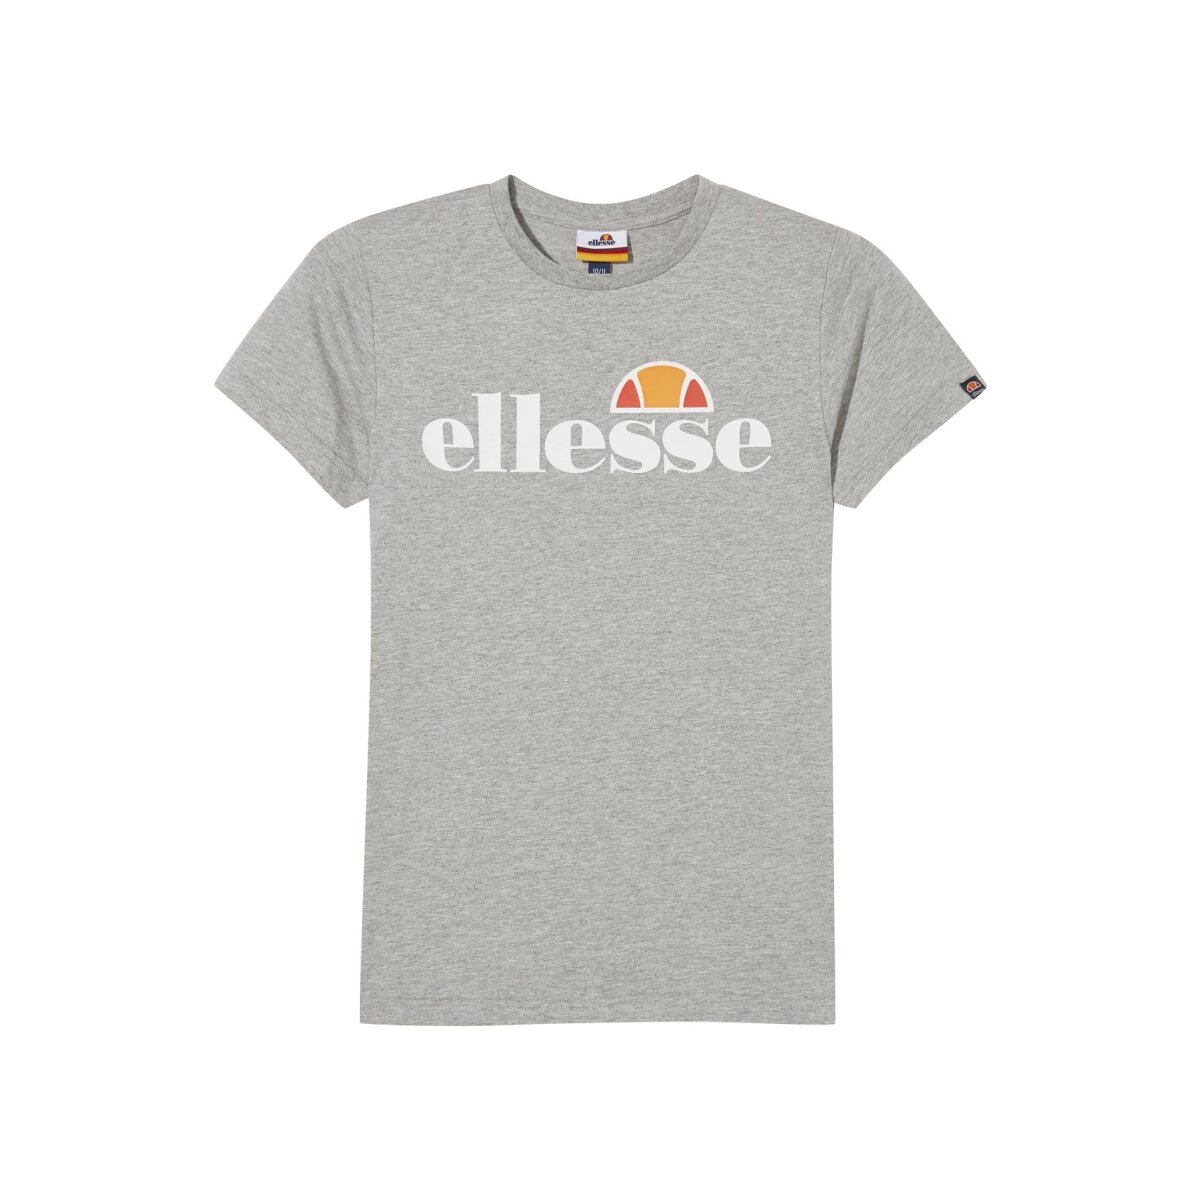 ellesse T-shirt for boys - MALINA, 22,45 €